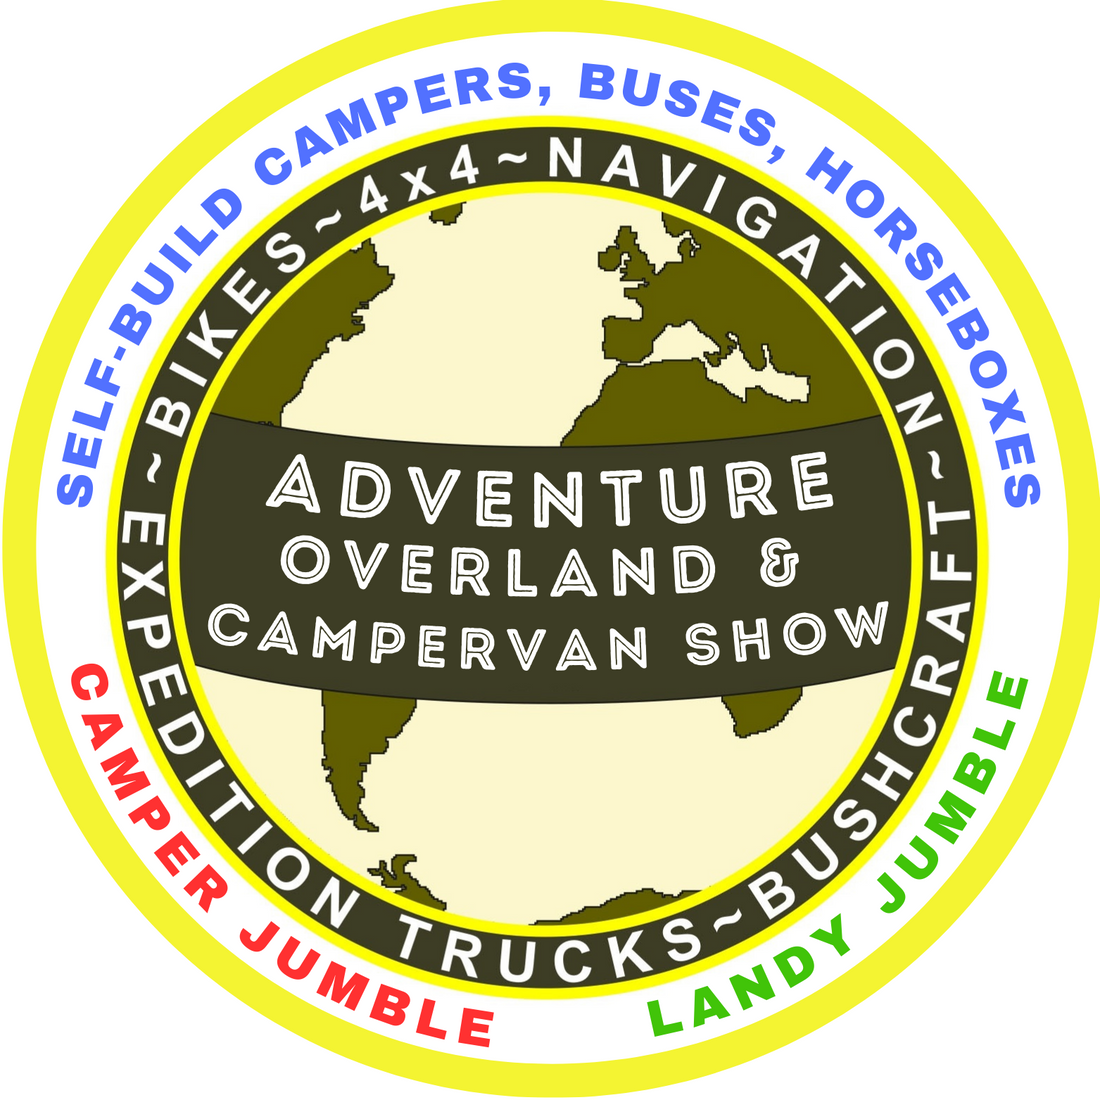 Adventure Overland & Campervan Show.